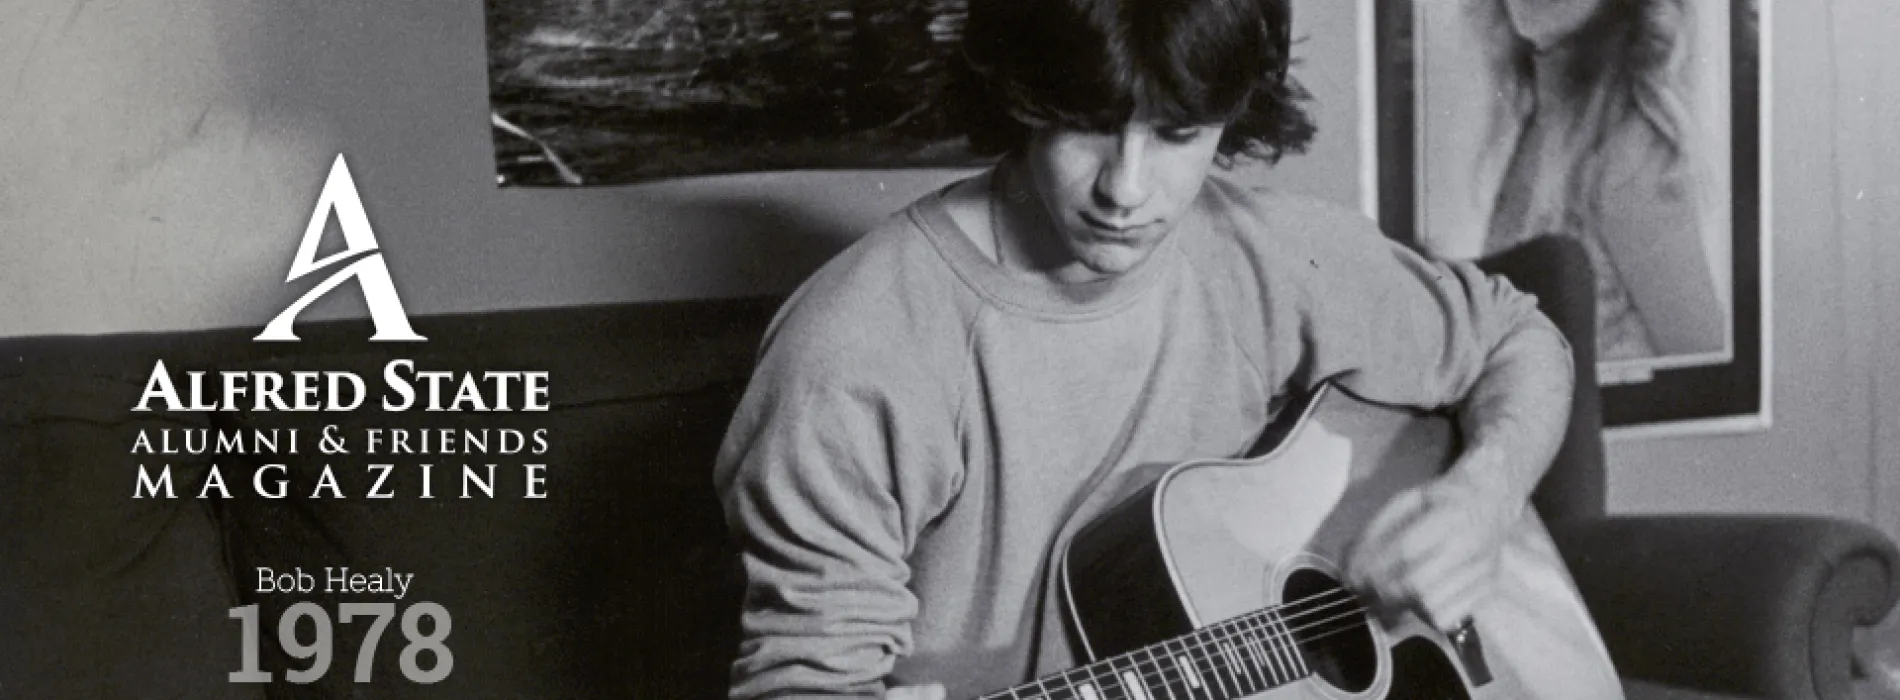 Alumni magazine logo, image of Robert Healey playing guitar in dorm room. Bob Healey 1978